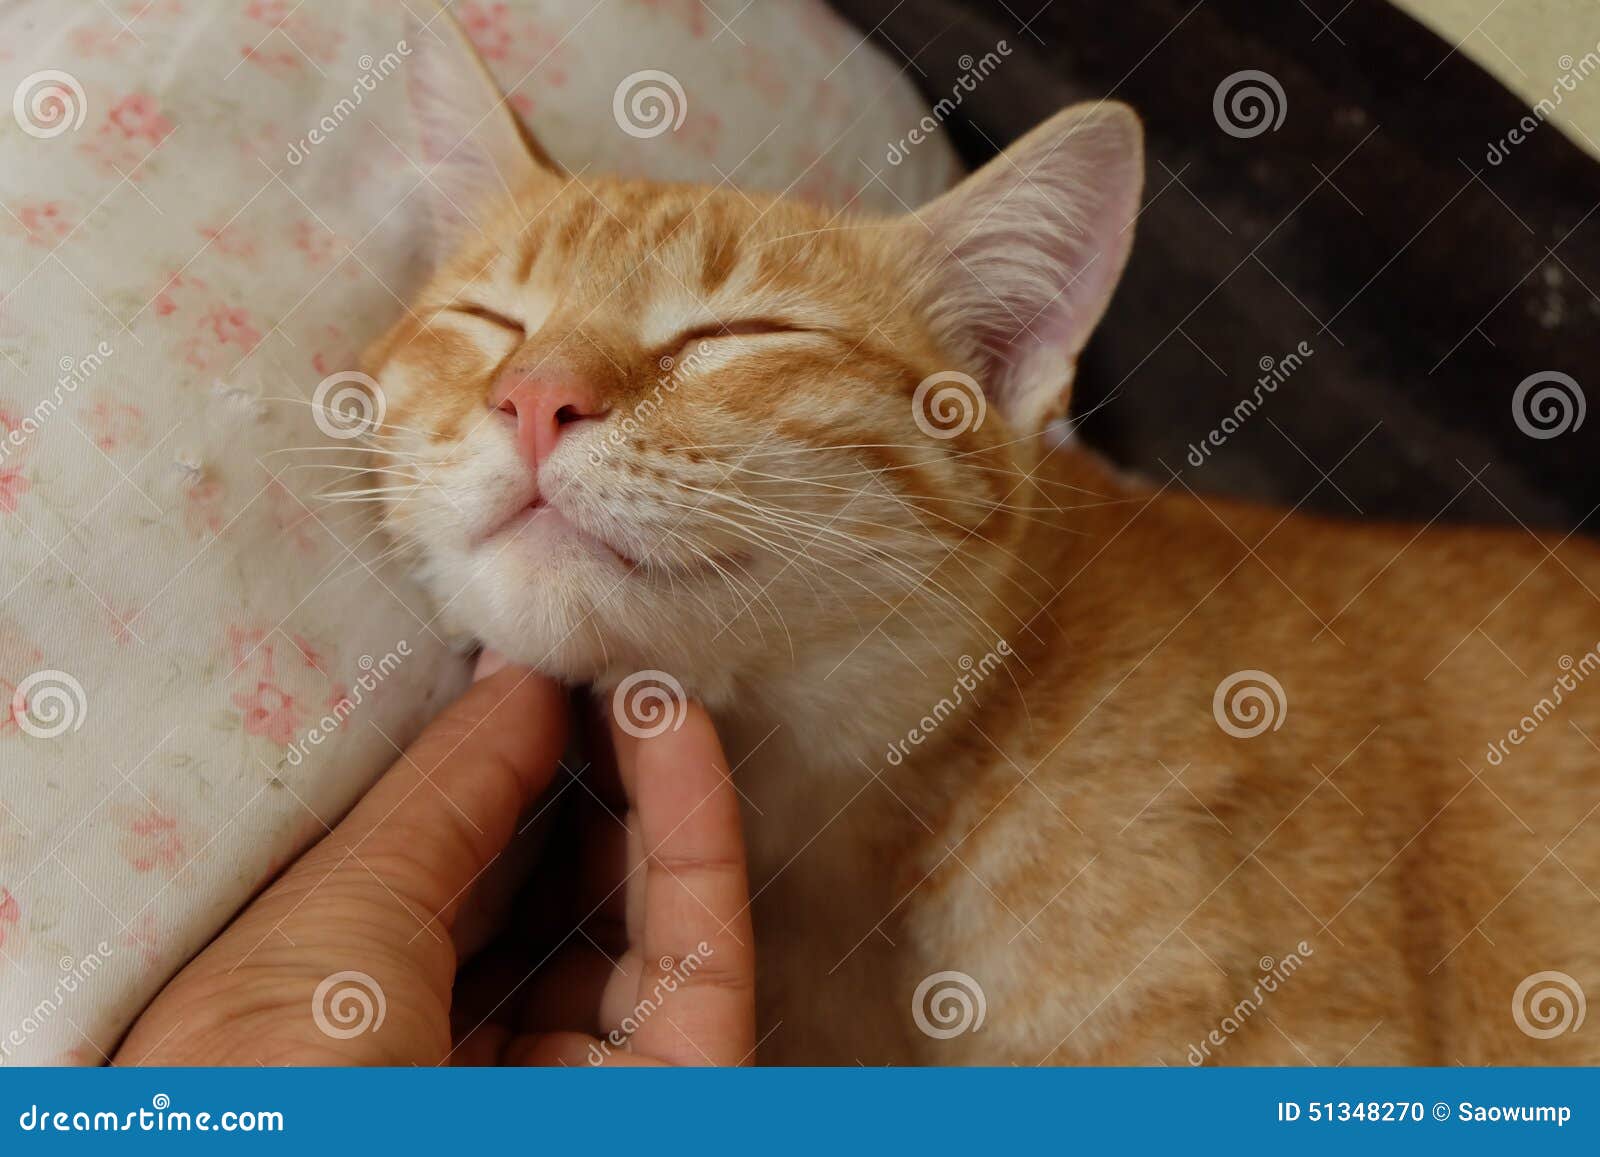 hand cat enchant